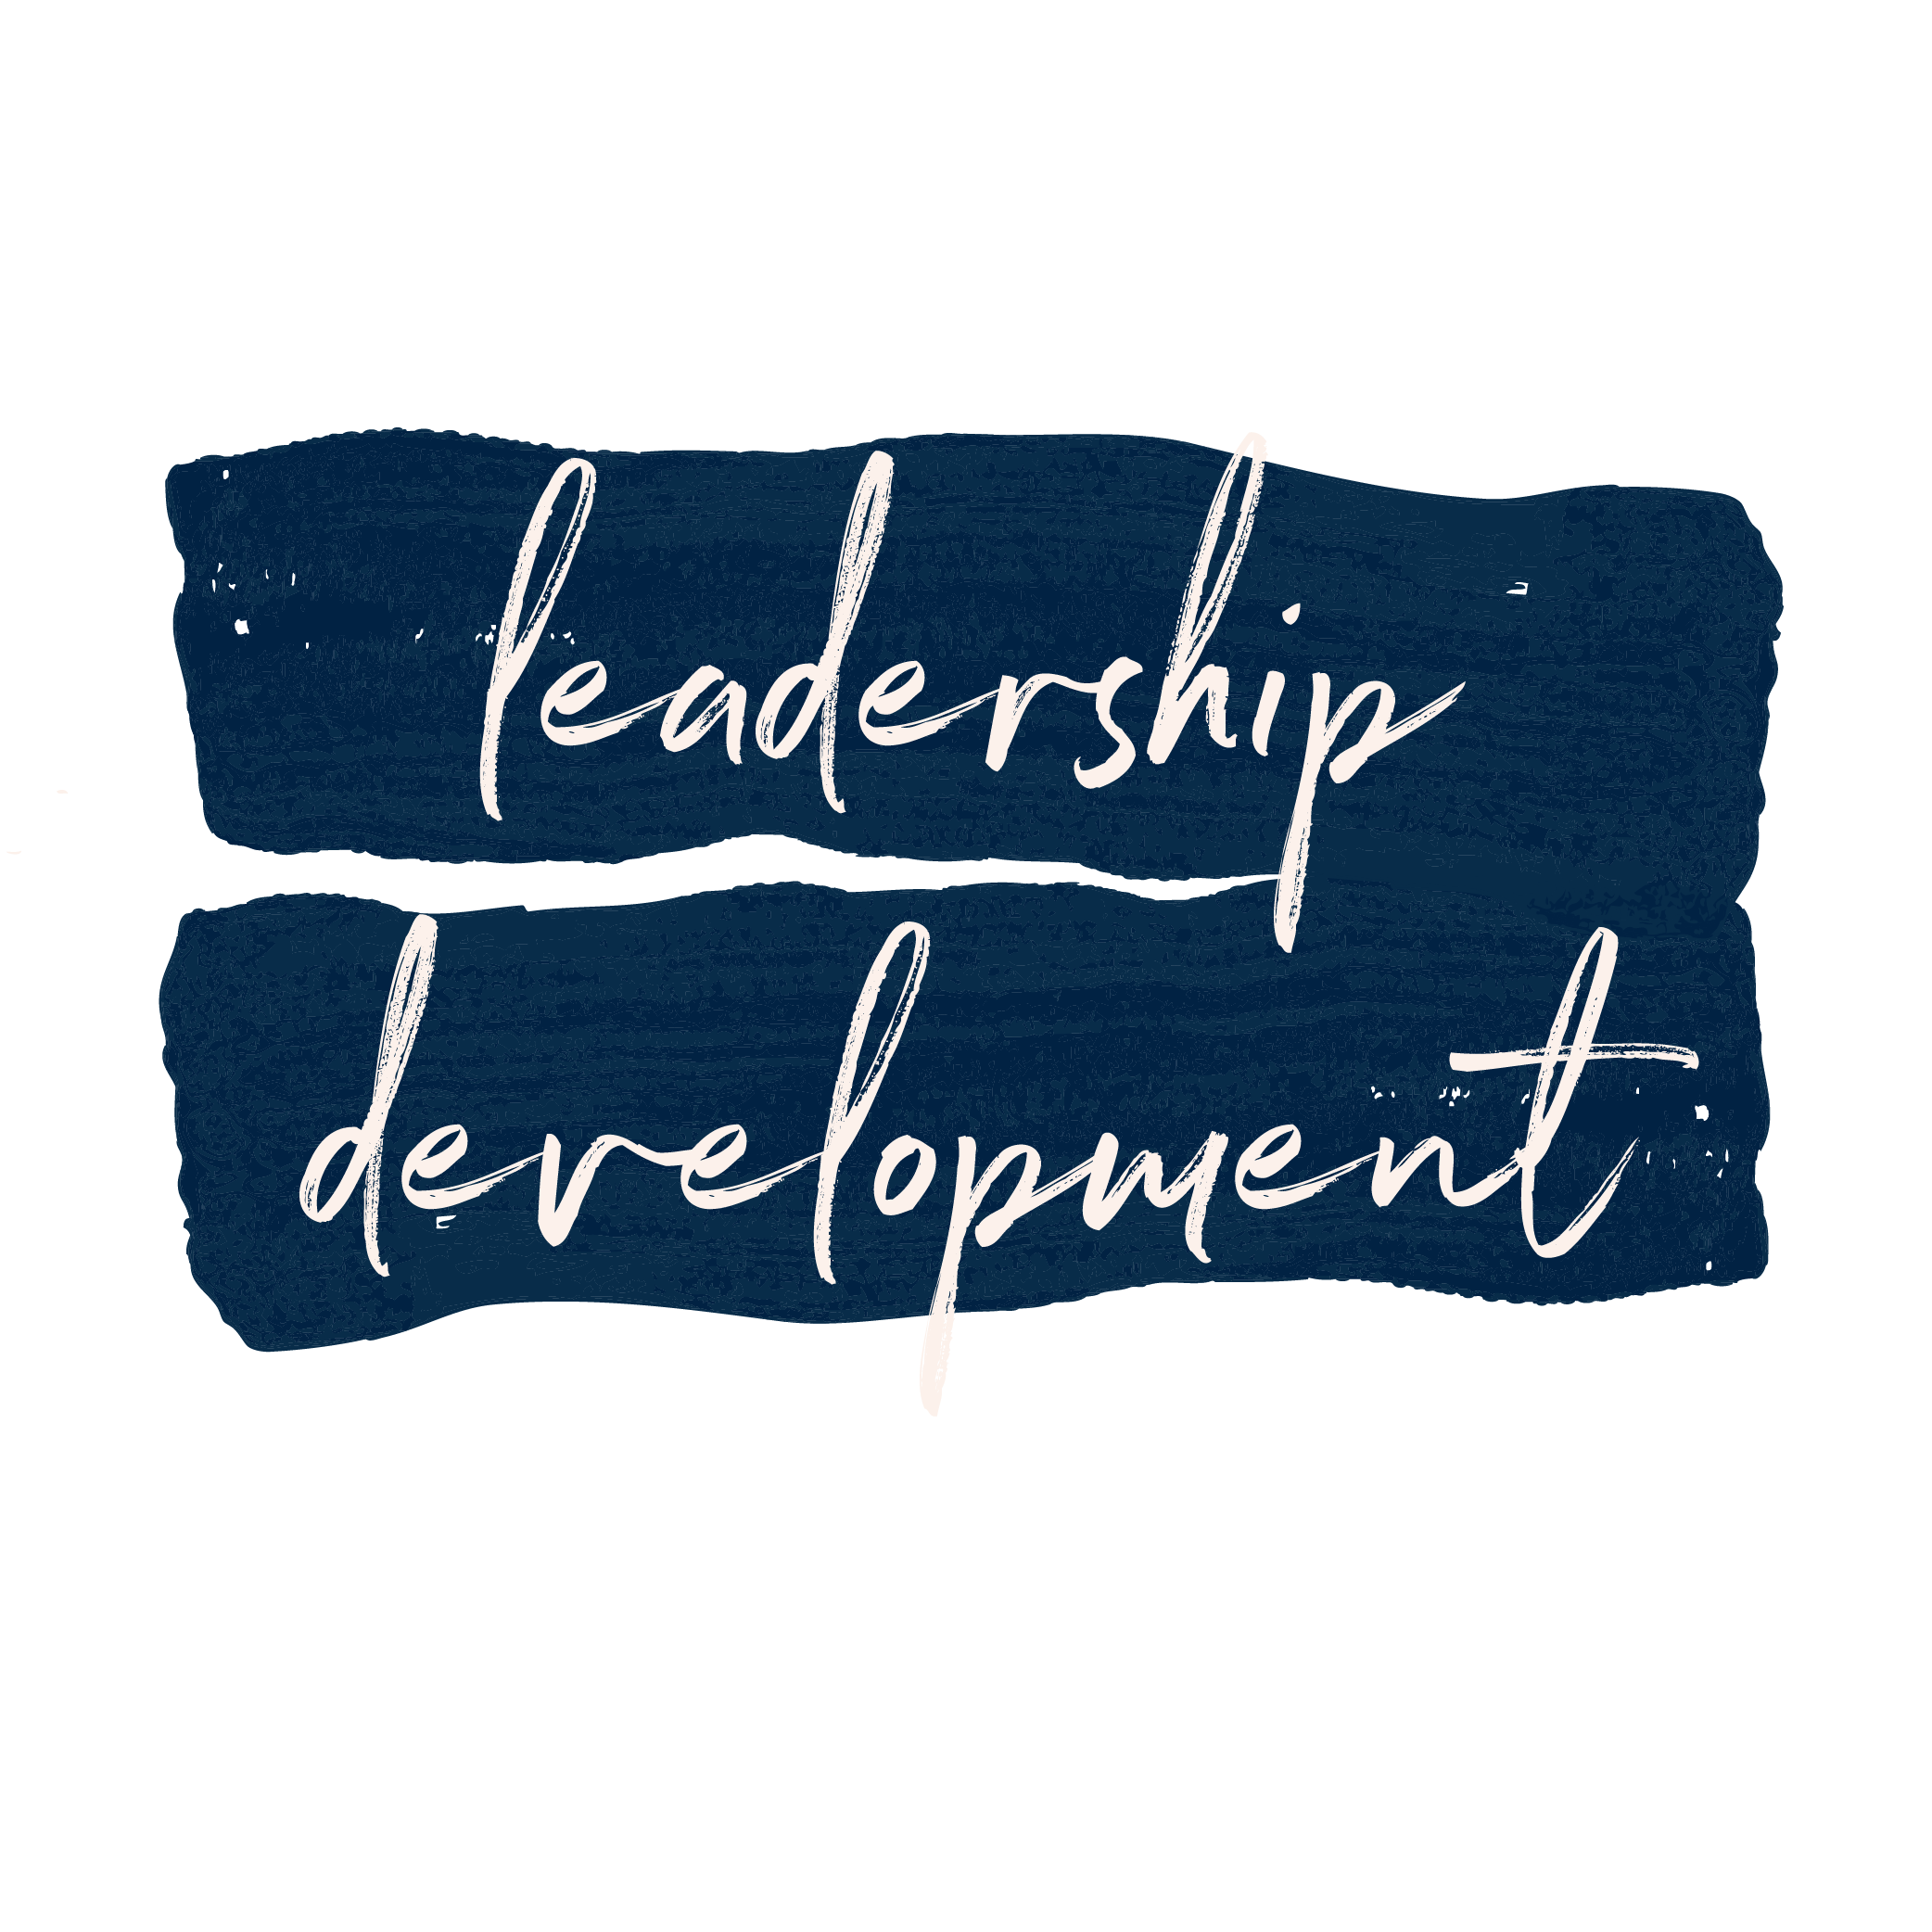 Copy of leadership development